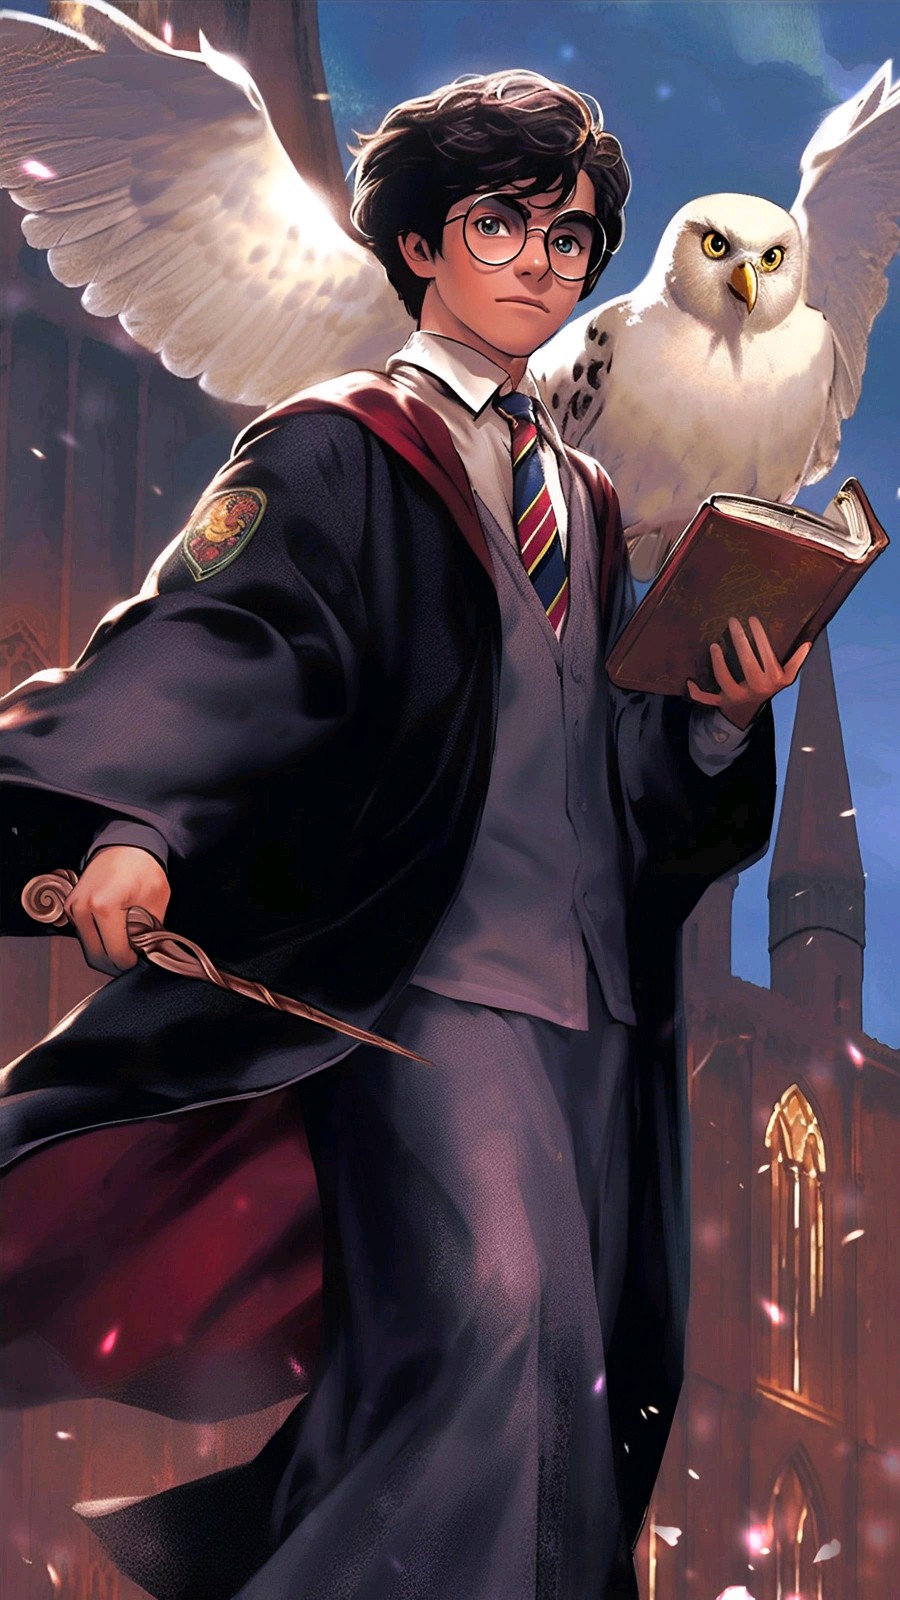 Harry Potter Poster Wallpaper by BookWizard on DeviantArt